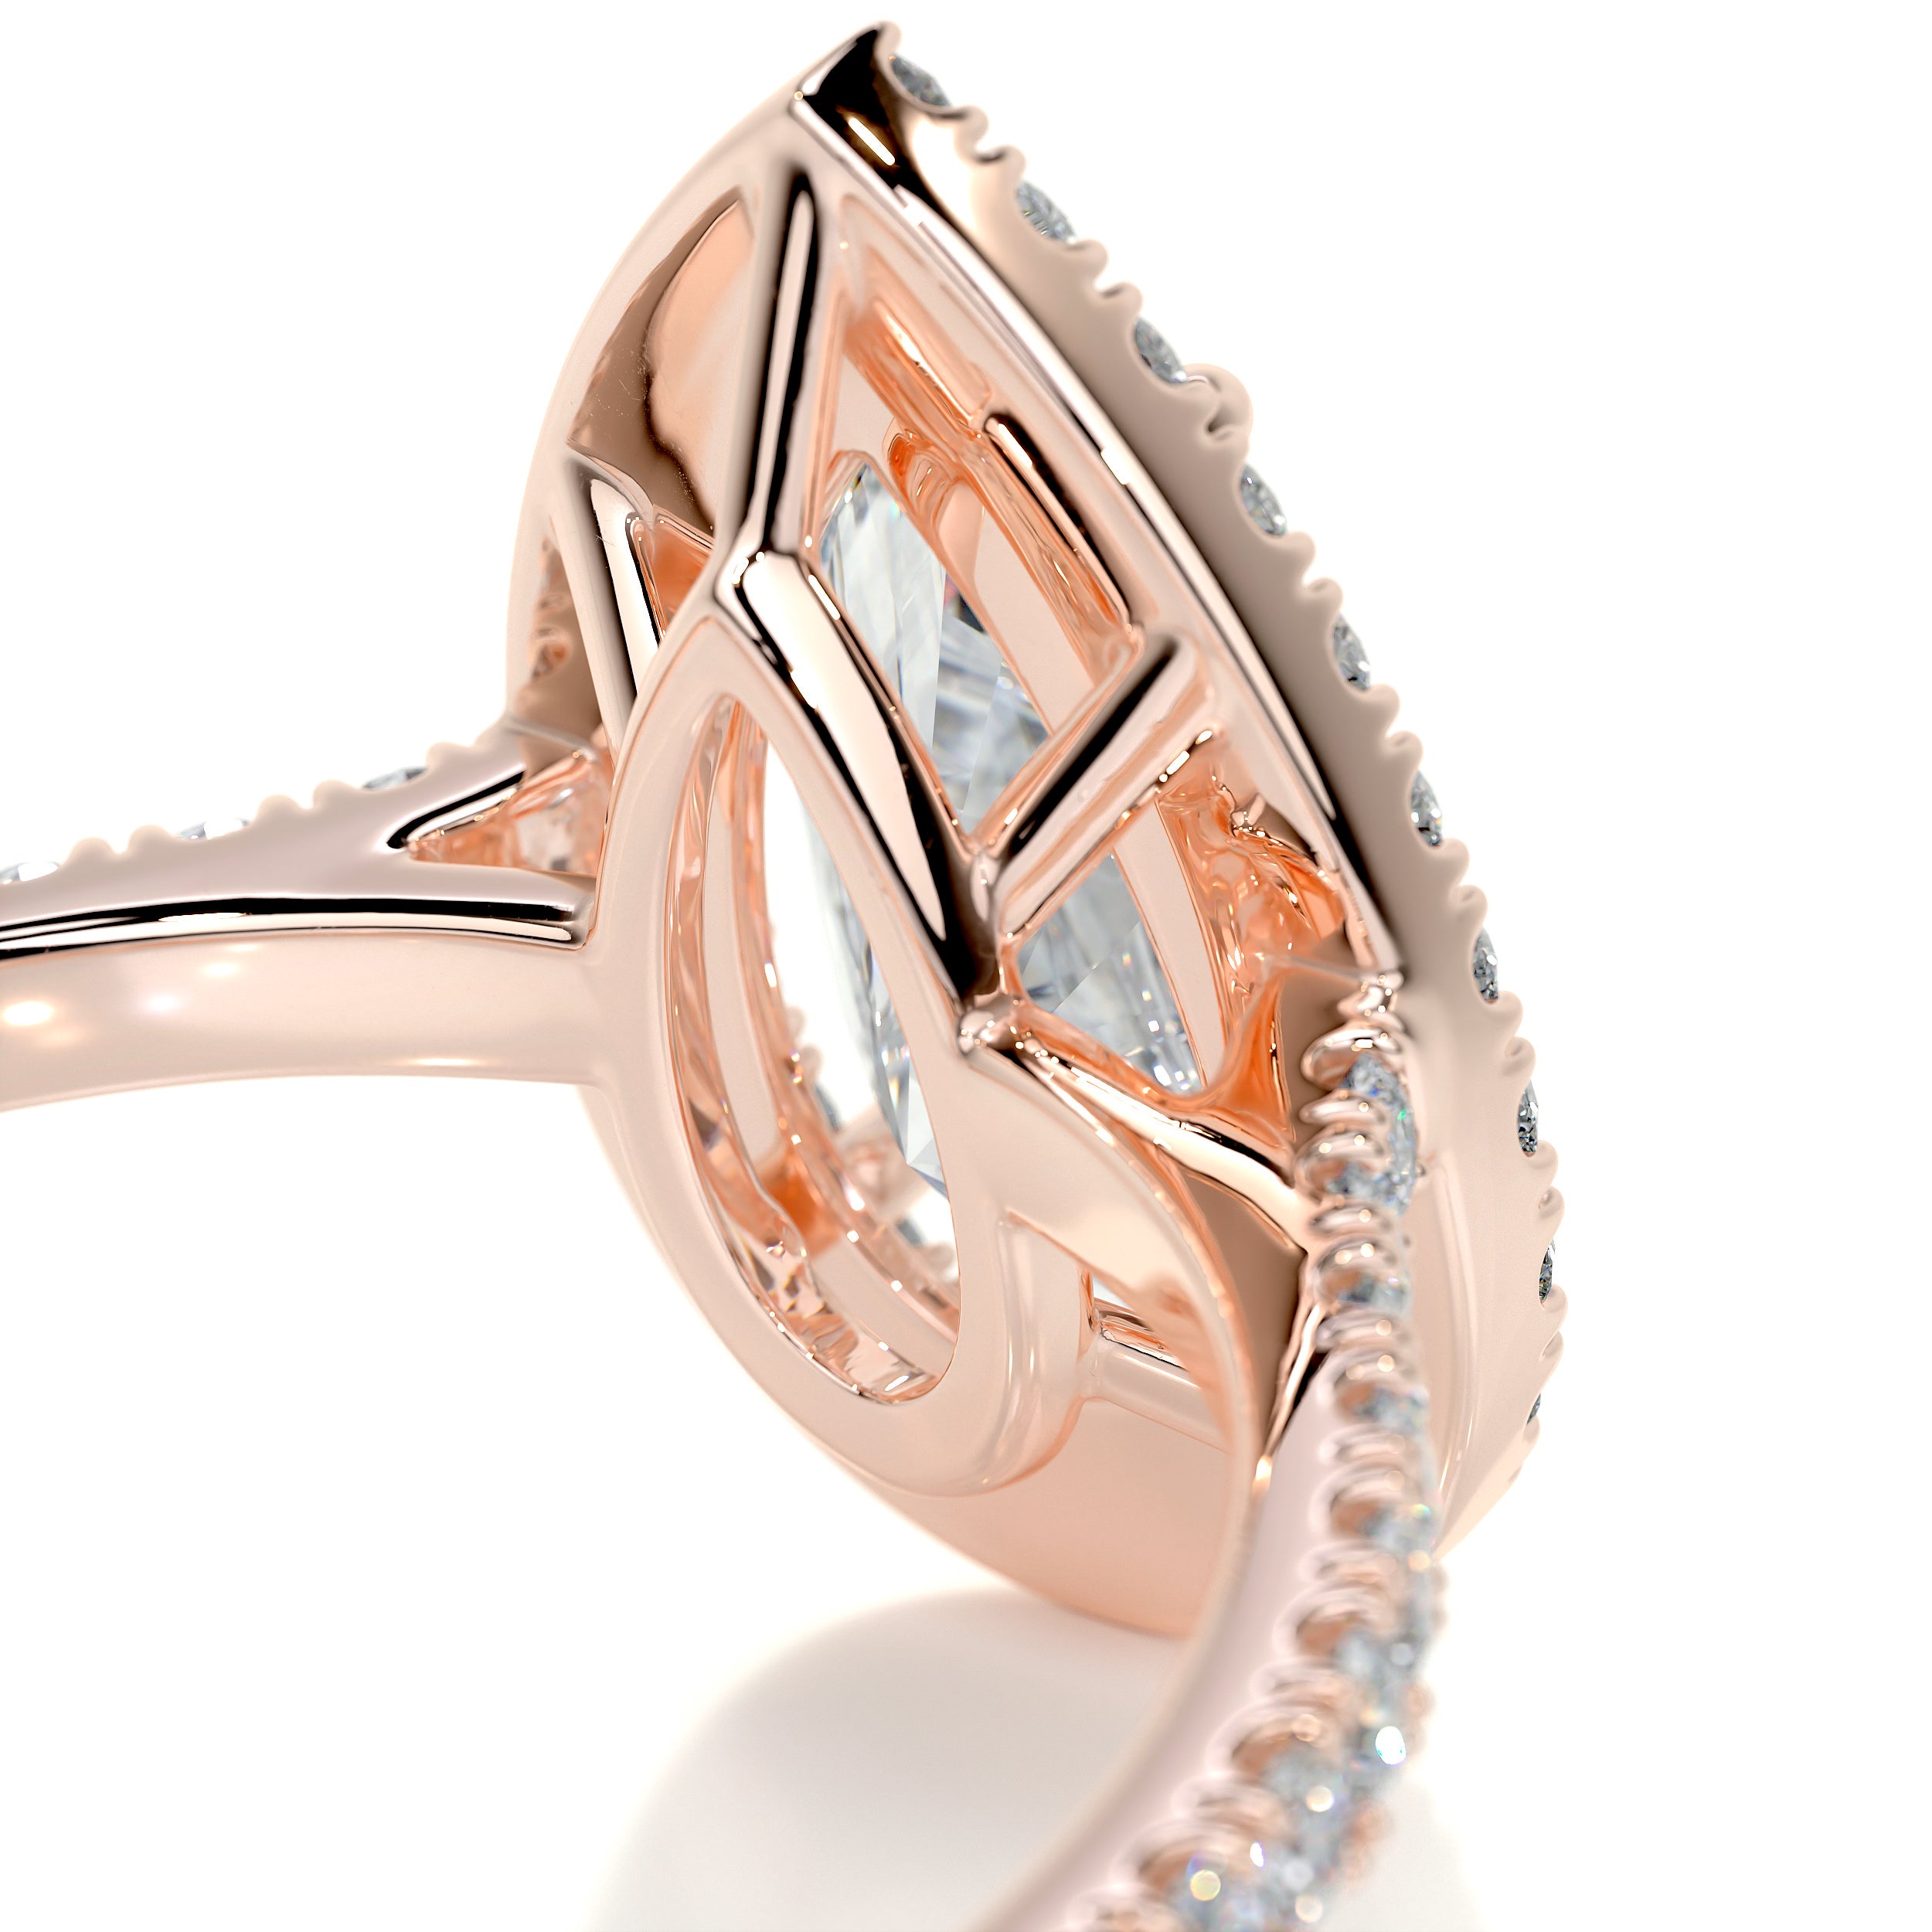 Sophia Diamond Engagement Ring   (2 Carat) -14K Rose Gold